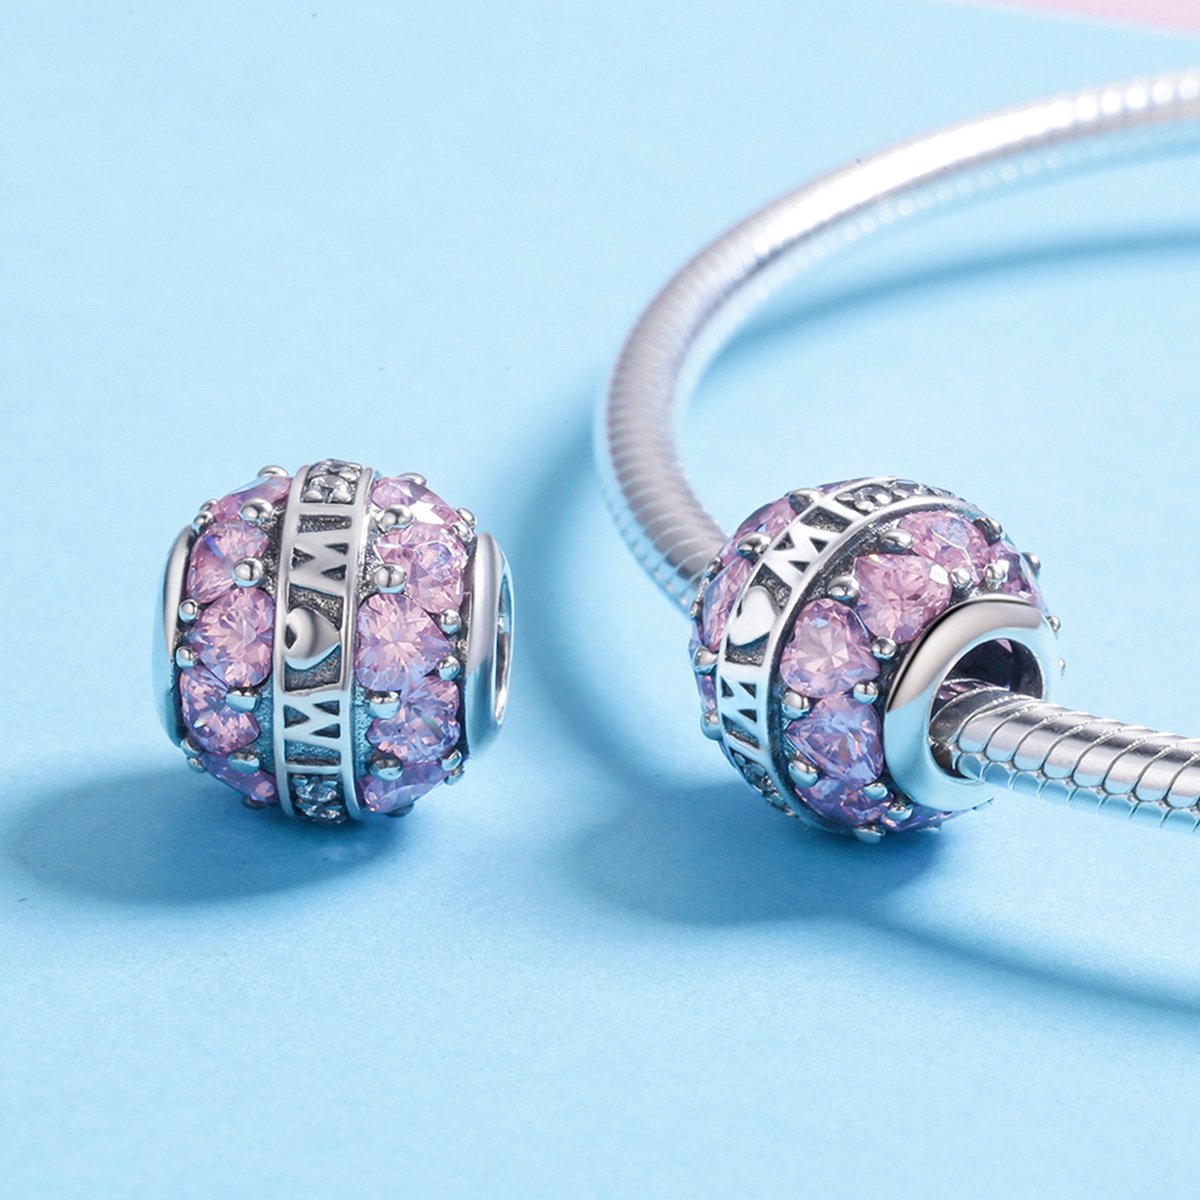 Sterling 925 silver charm the sakura mom bead pendant fits Pandora charm and European charm bracelet Xaxe.com